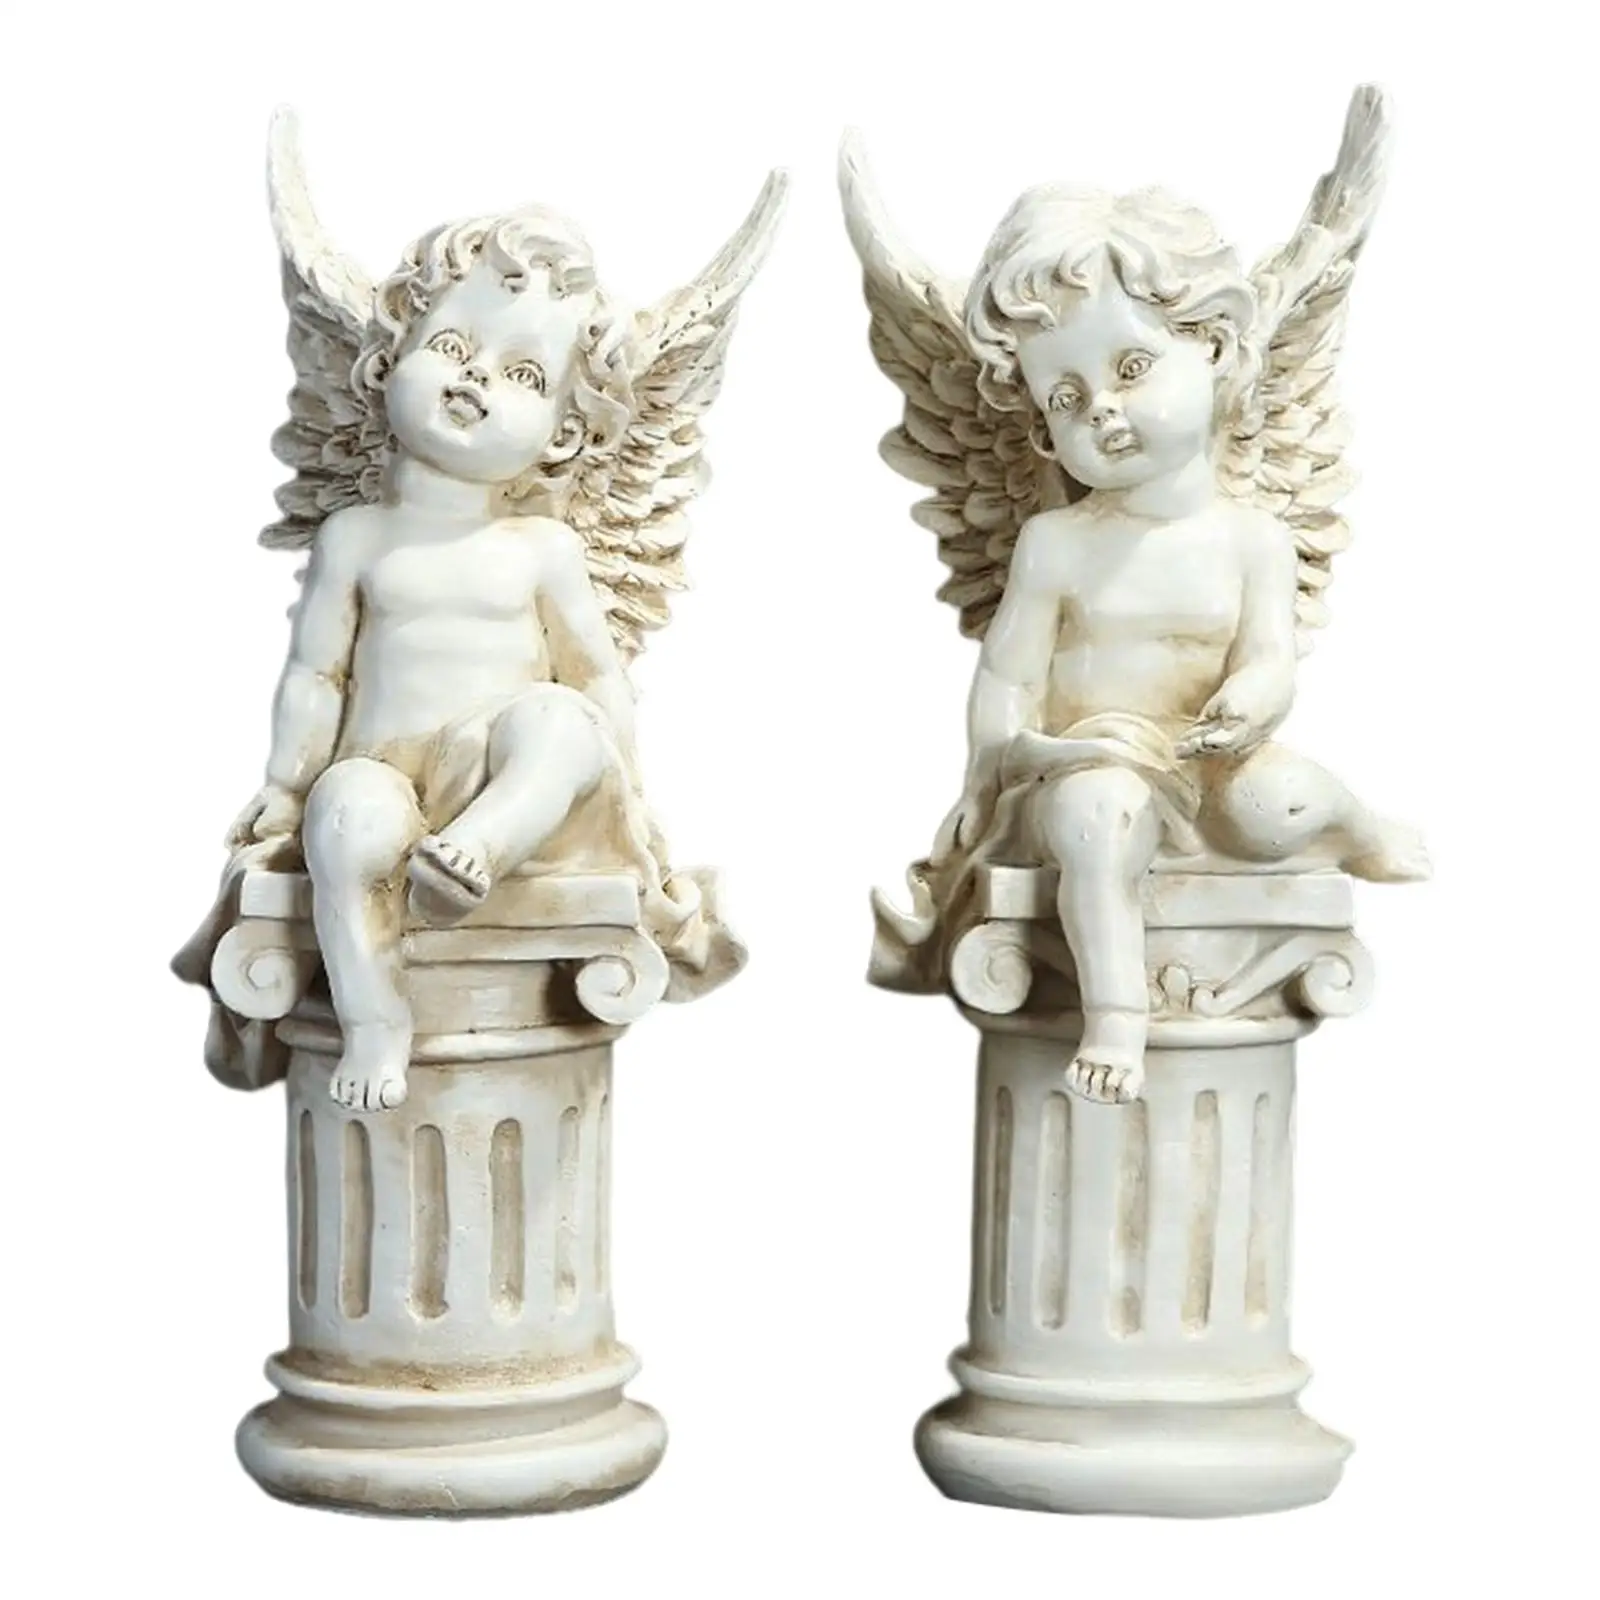 2 Pieces Cute Cherub Statues Roman Pillar Memorial Props Garden Figurines for Indoor Outdoor Wedding Yard Landscaping Fountain